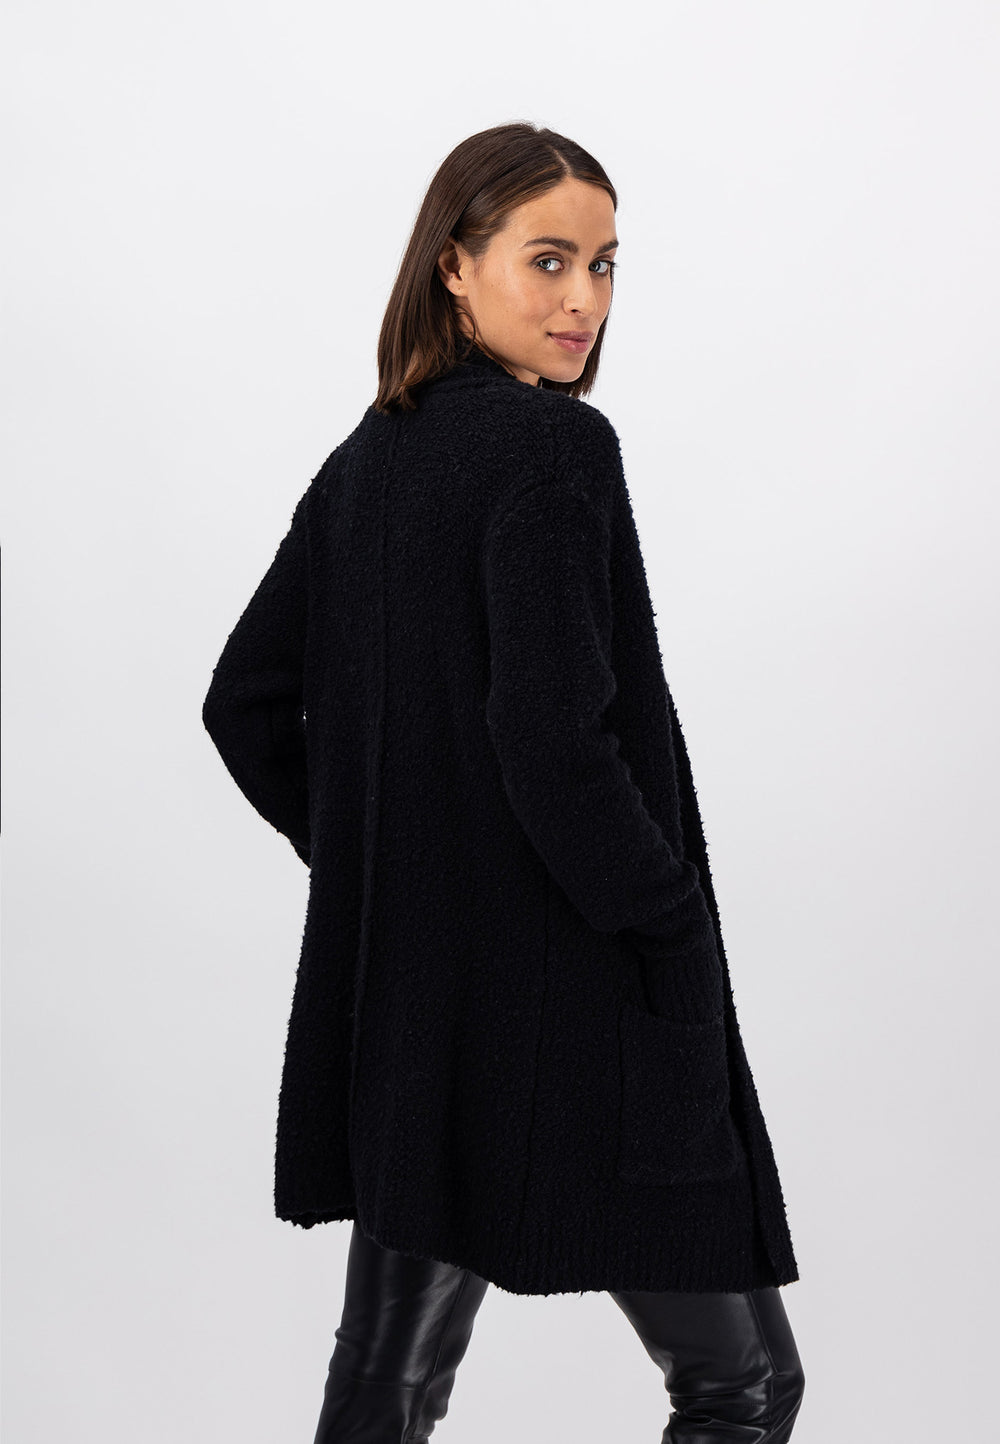 Ladies Sweaters FYNCH-HATTON Offizieller & – Official 2 Online Cardigans – | | Shop Page Fynch-Hatton Shop Online